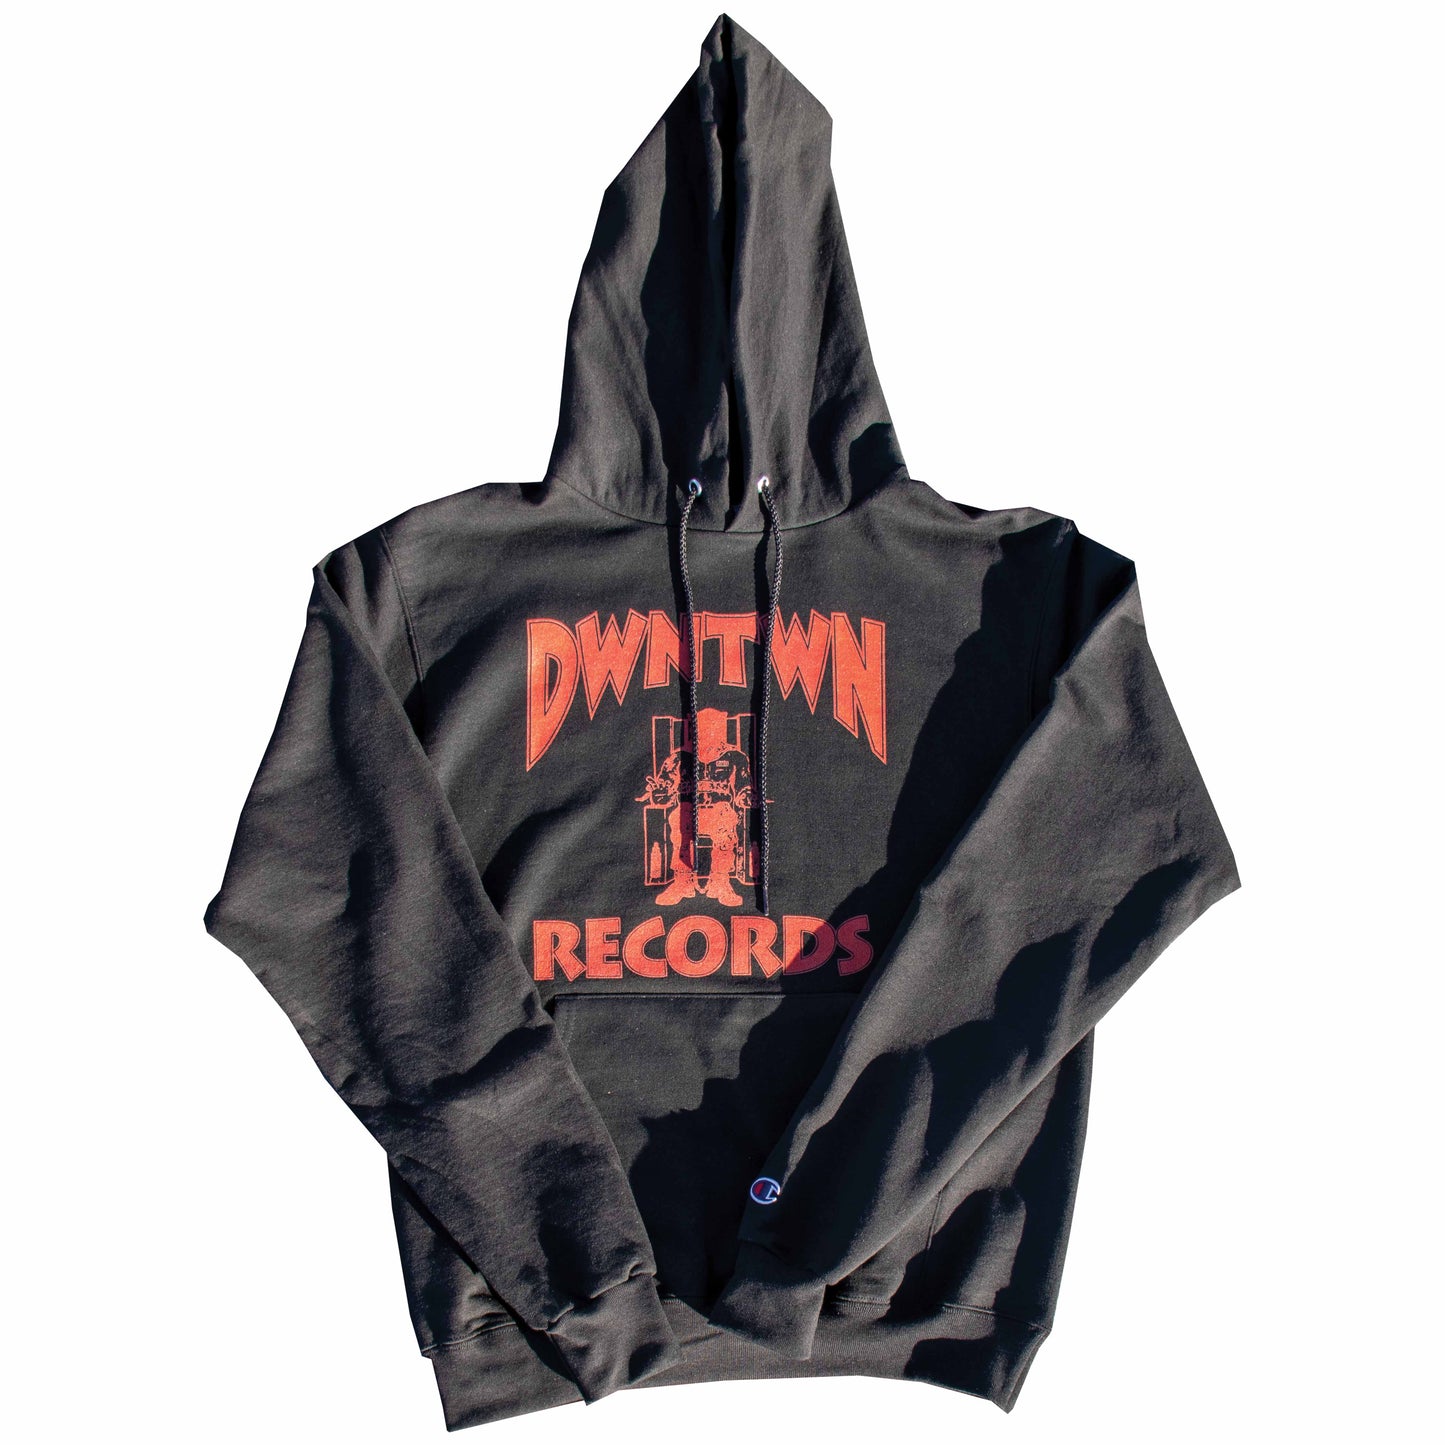 Dwntwn Records Printed Sweatshirt